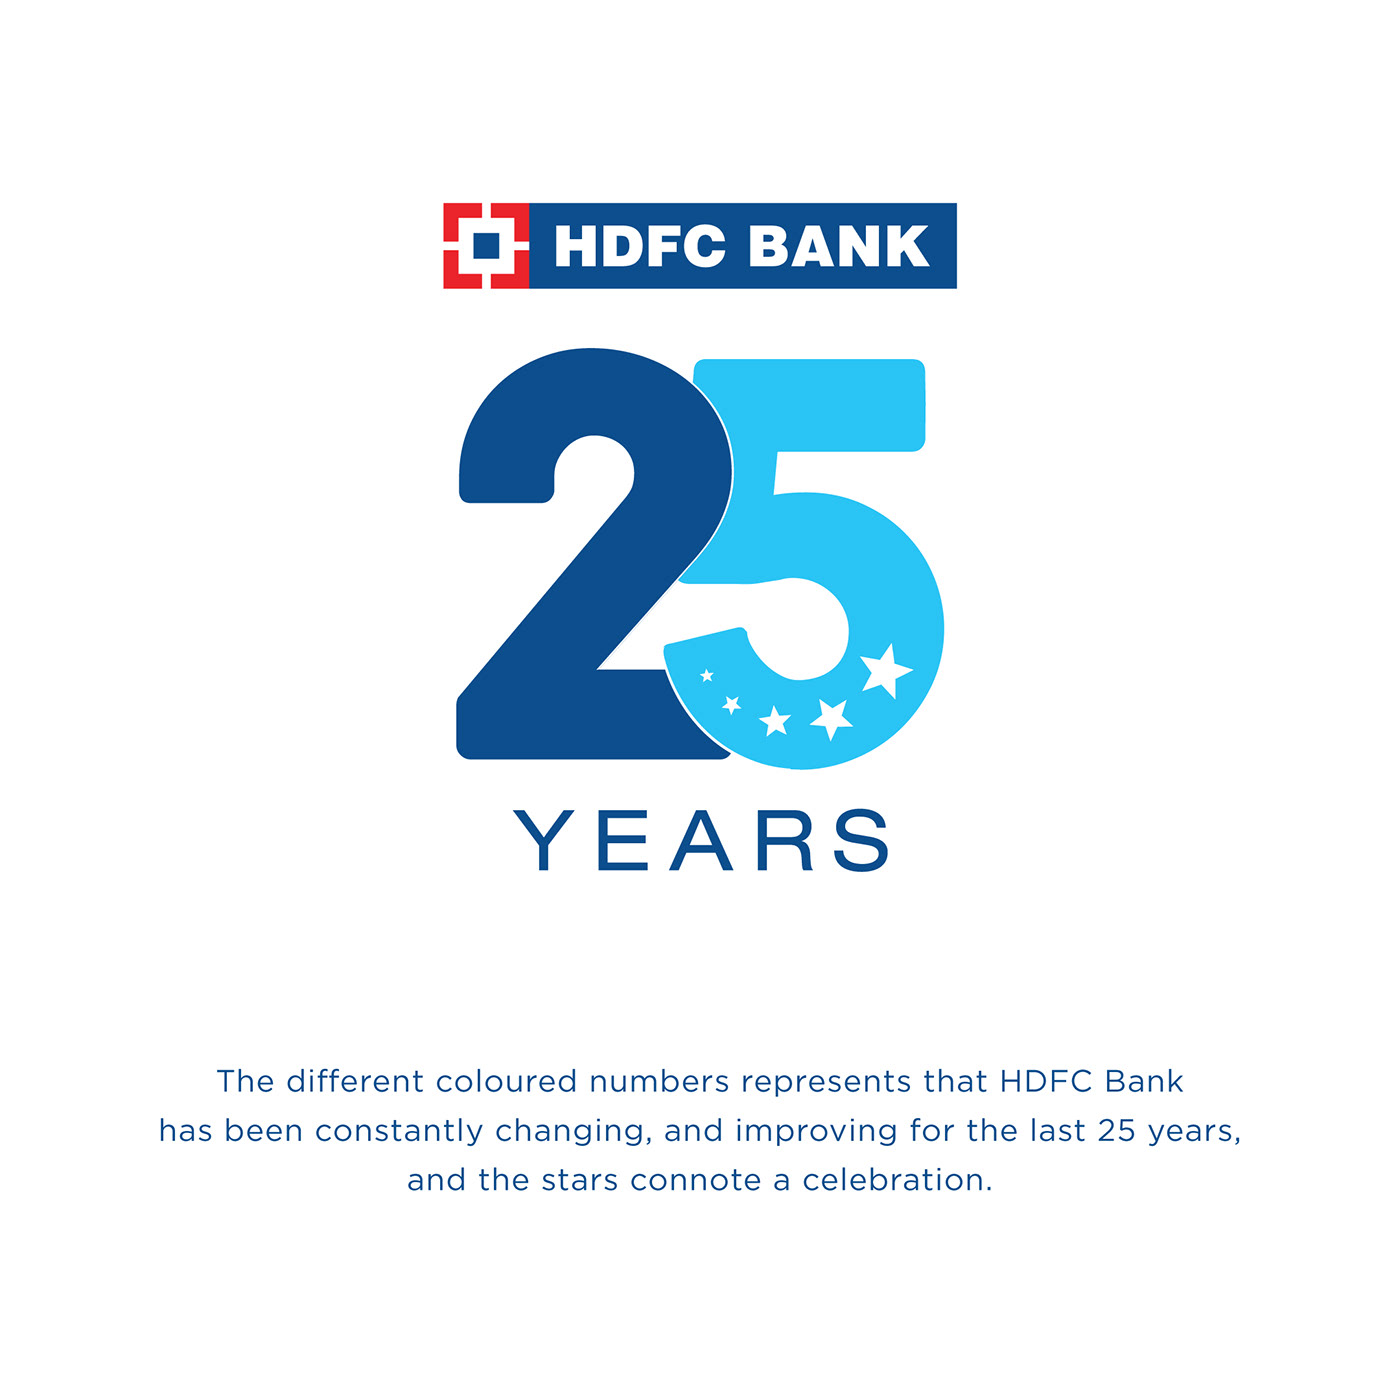 HDFC Bank finance money 25 years sliver jubilee tomorrow Long copy ad future preparing logo